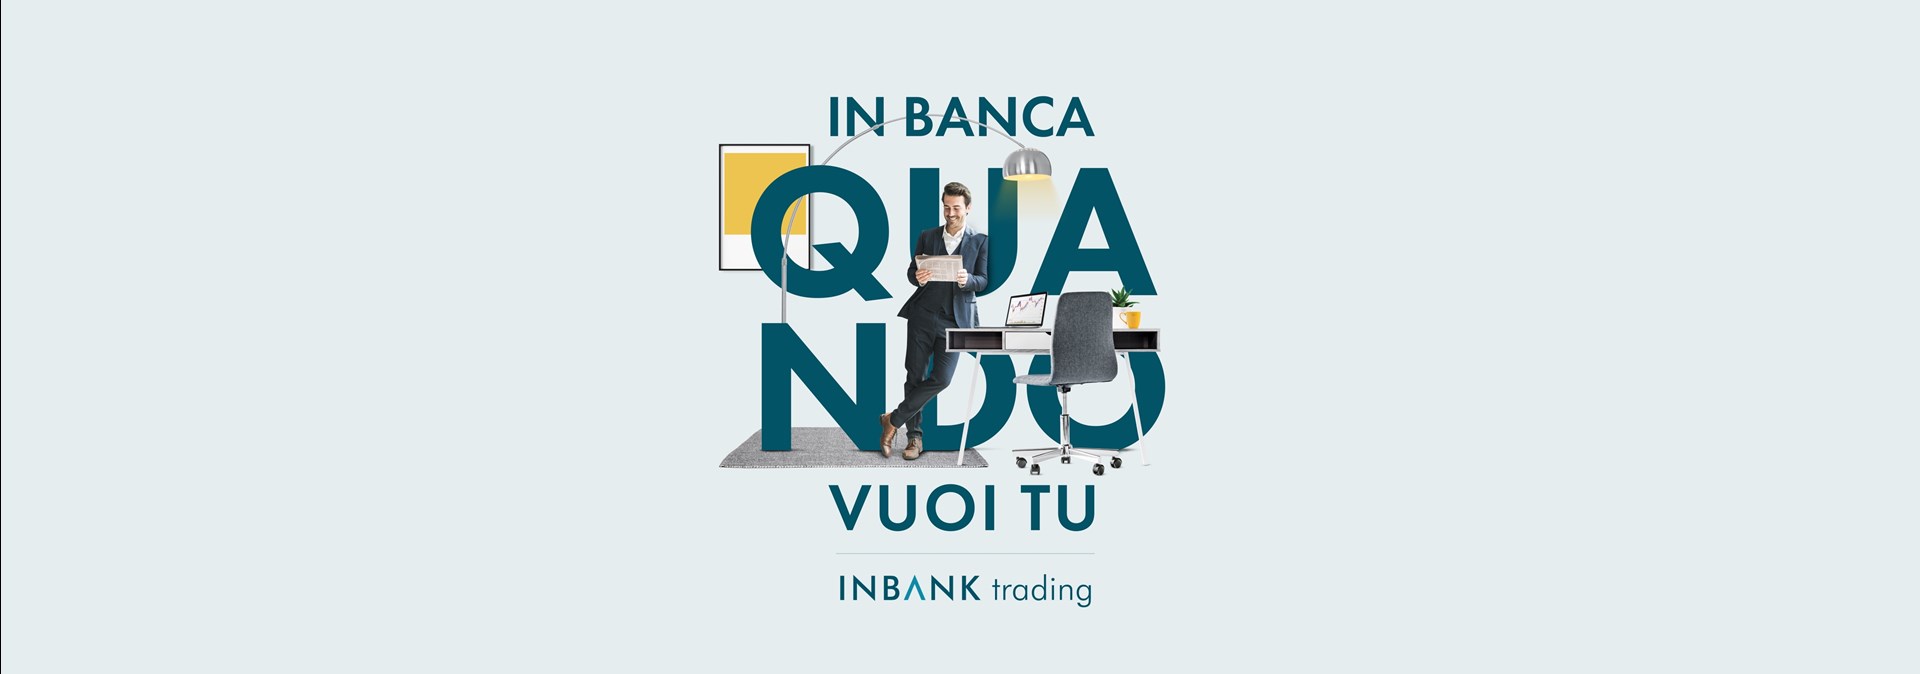 Inbank trading